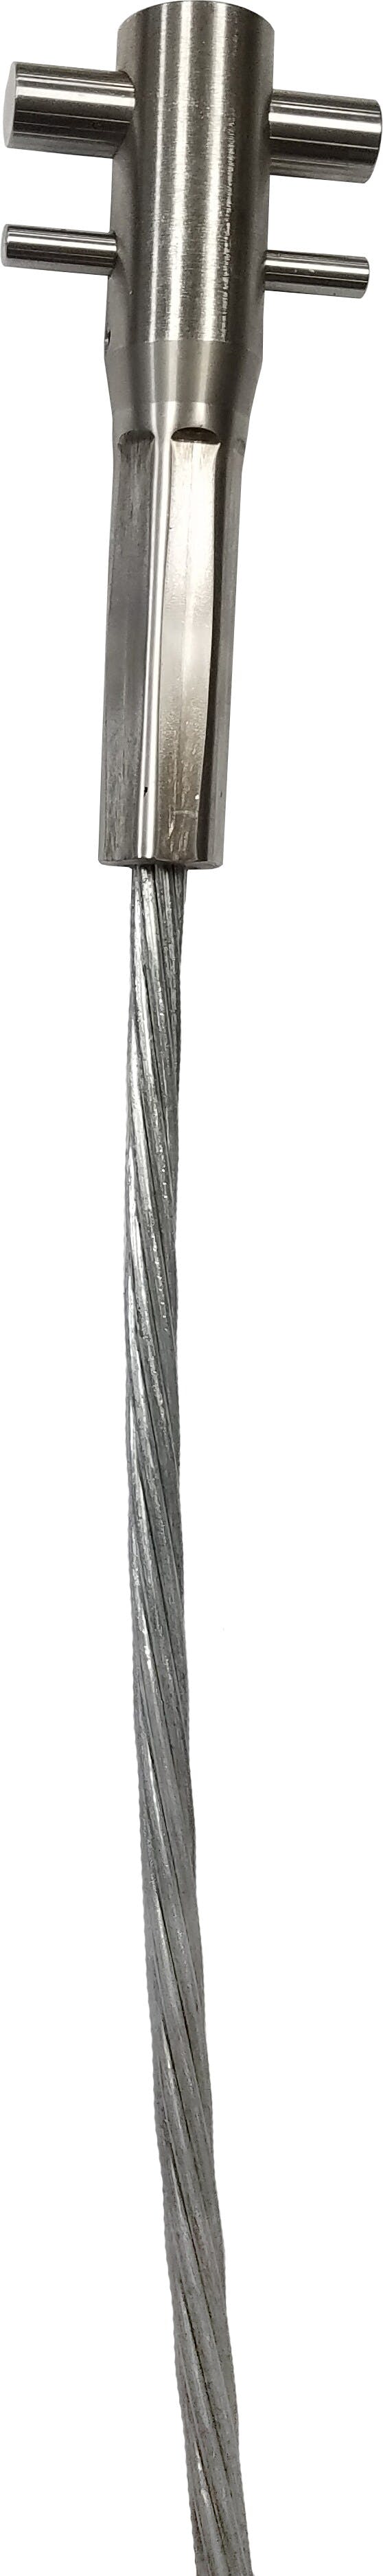 3M™ DBI-SALA® Lad-Saf™ Swaged Cable 6115009, 3/8 Inch, Galvanized Steel, 50 m